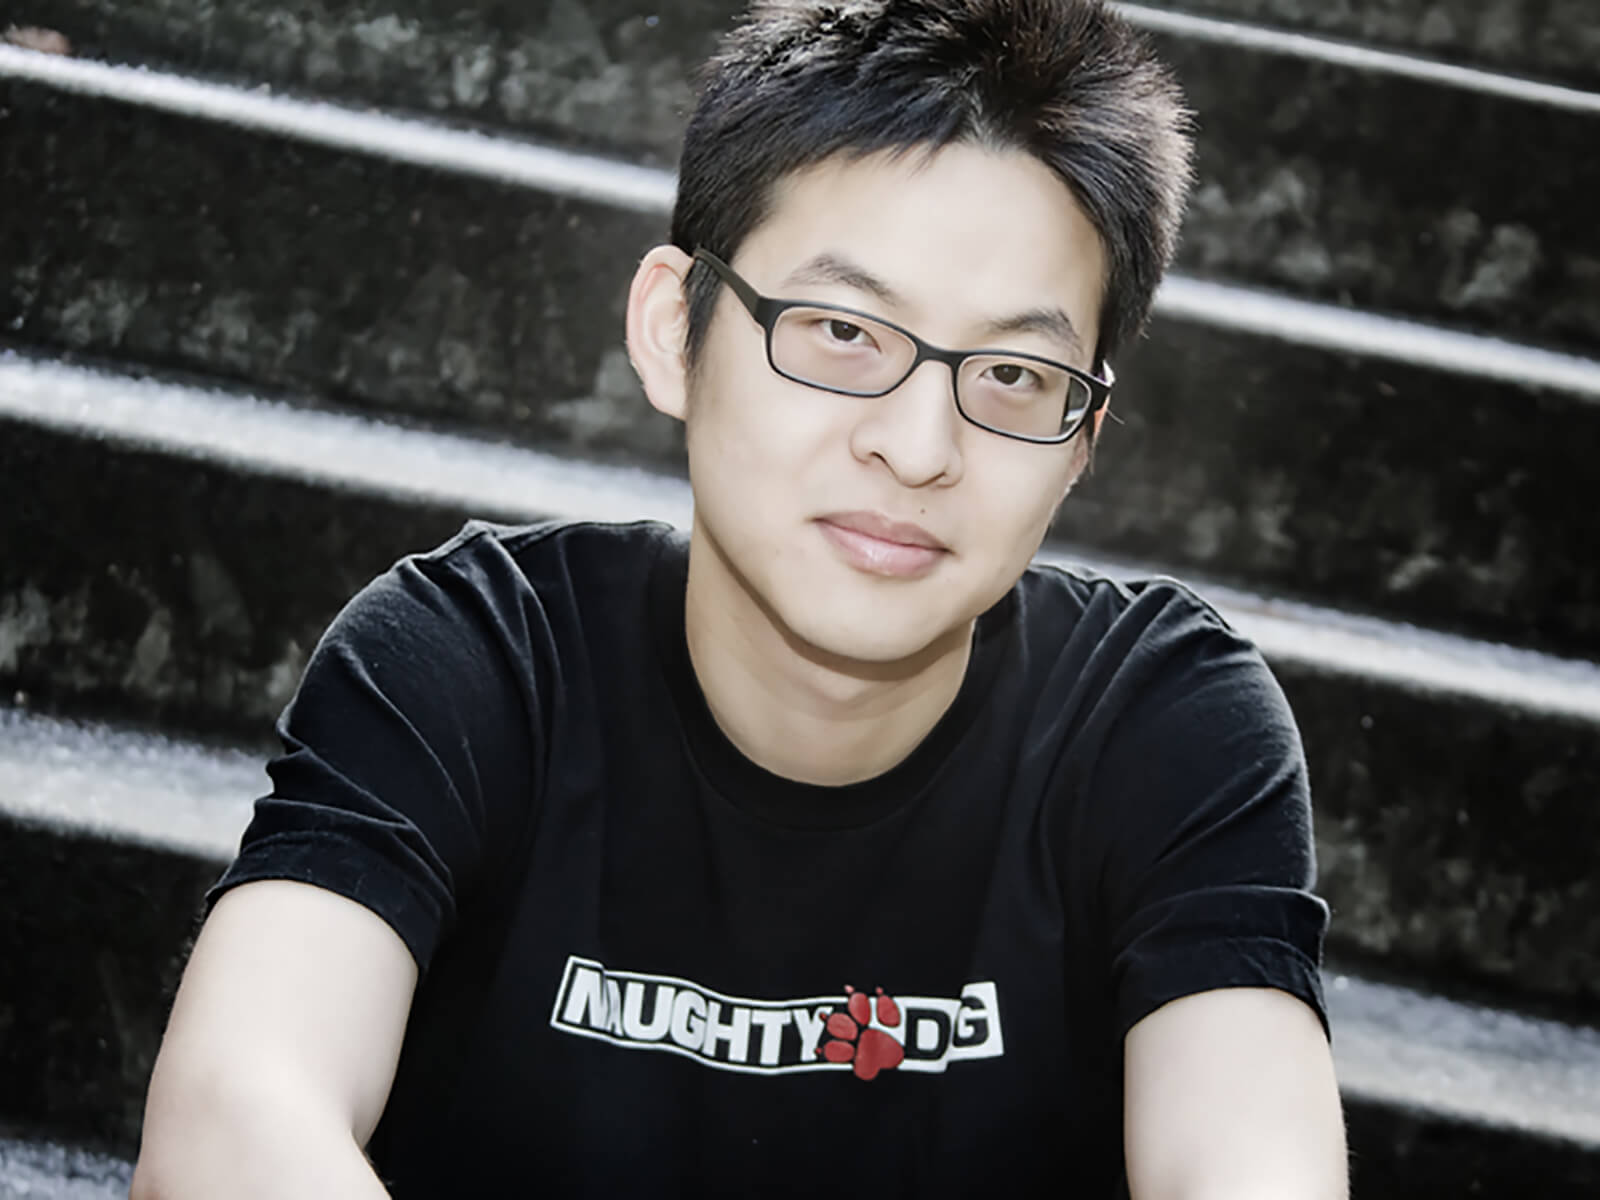 Ming-Lun "Allen" Chou in a Naughty Dog t-shirt